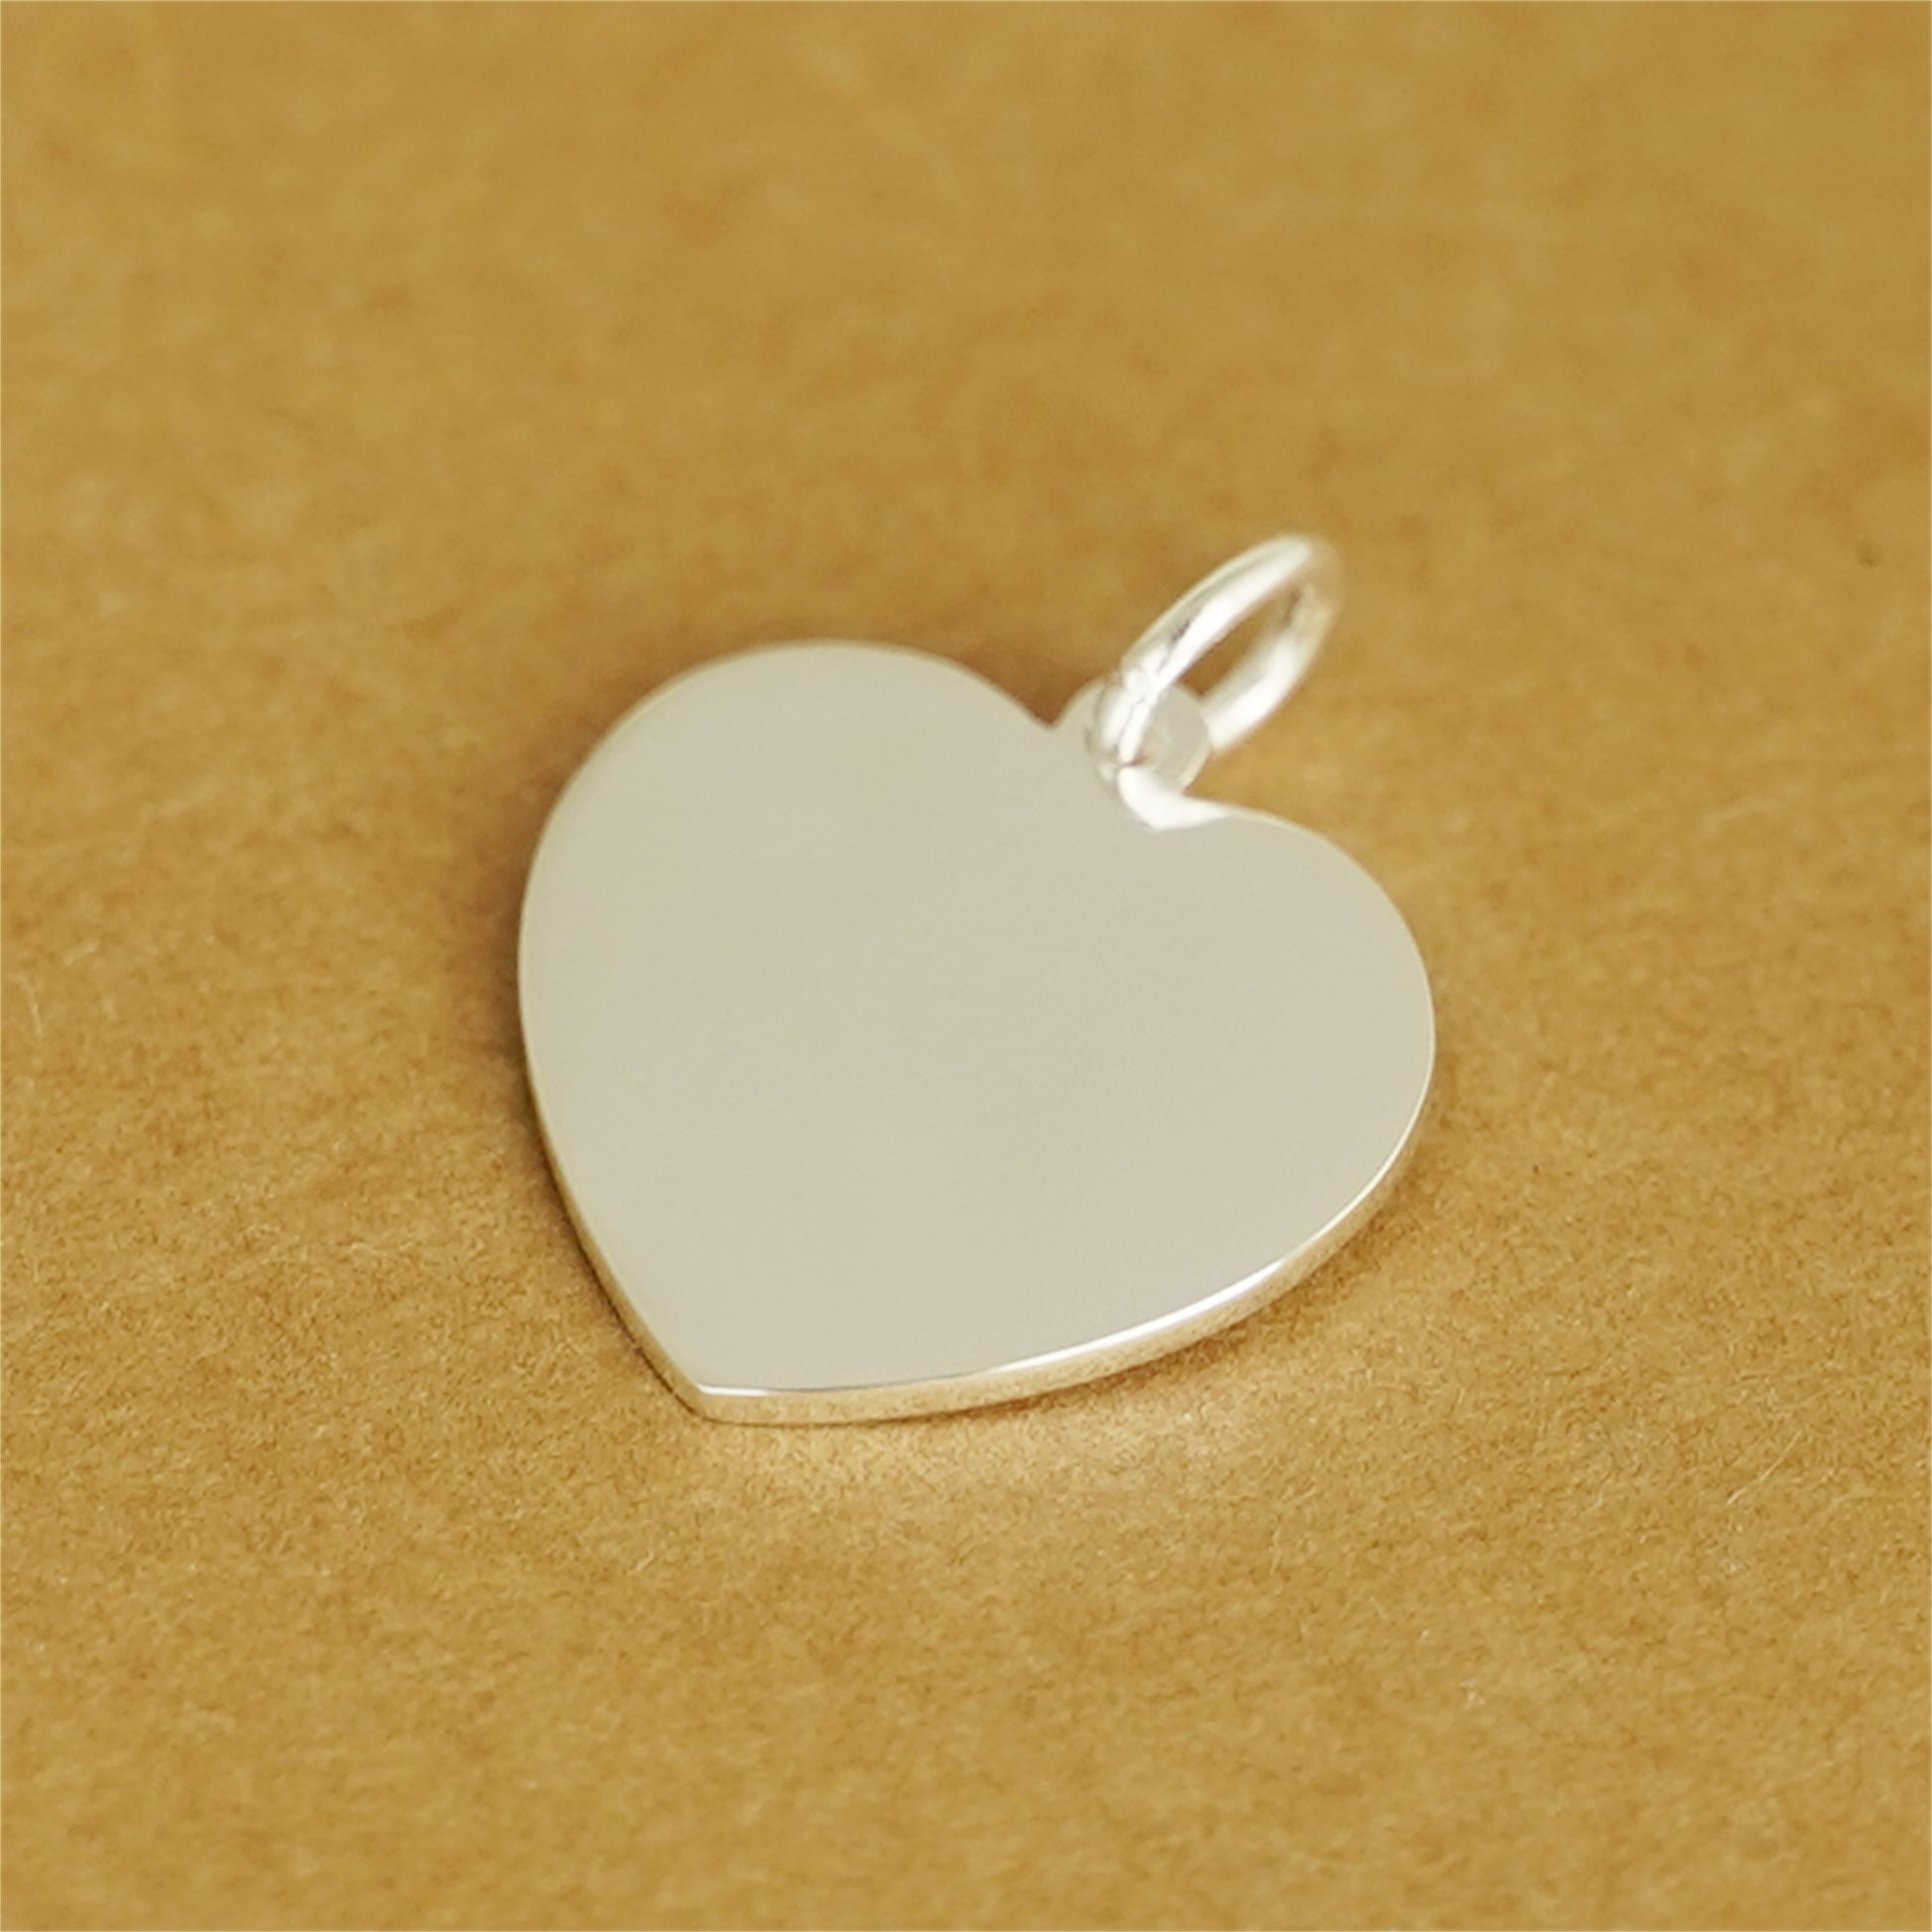 Sterling Silver Plain Polished Love Heart Charm Pendant 22mm 5.3g - sugarkittenlondon